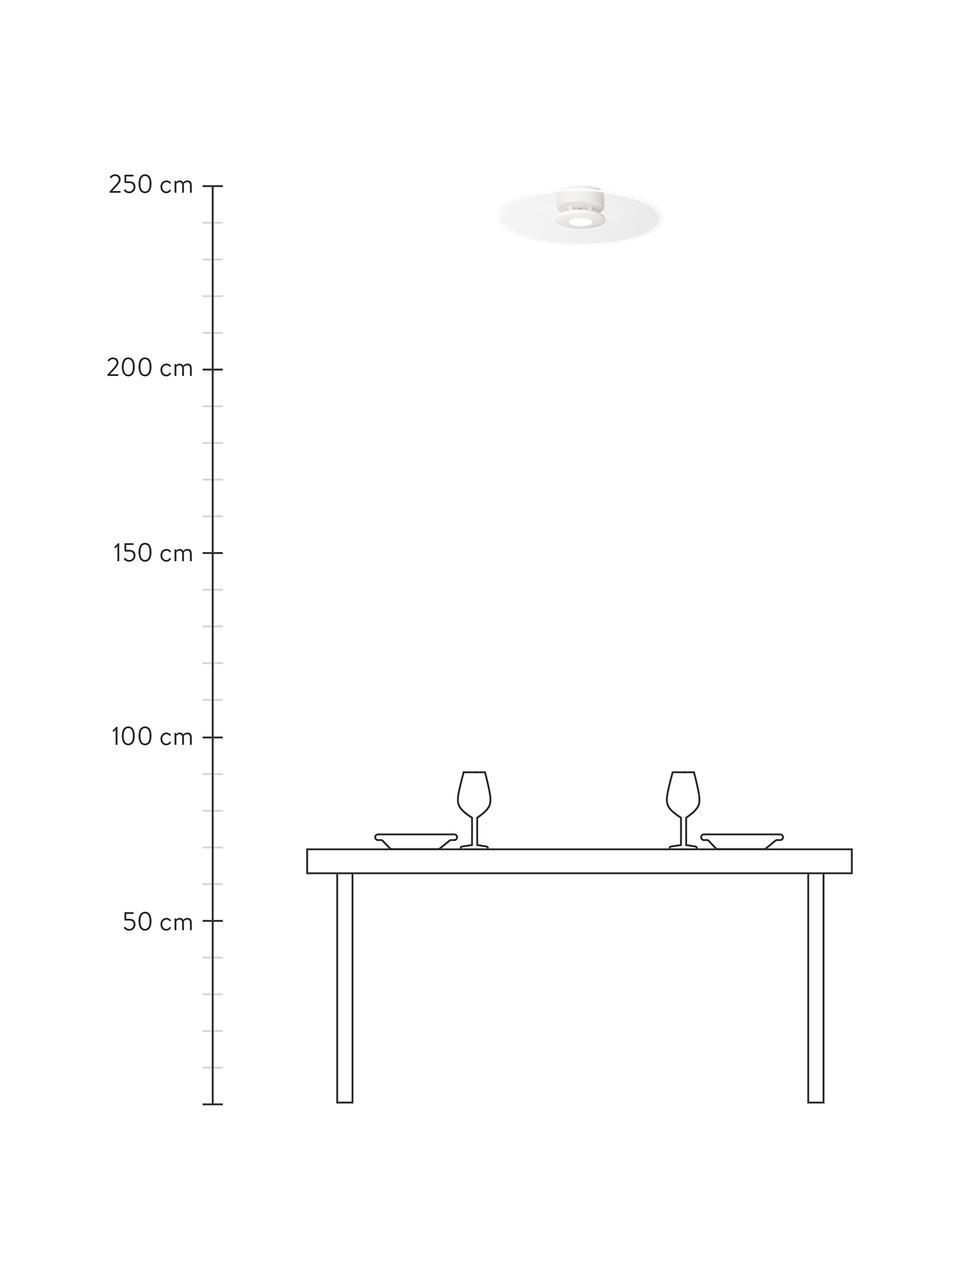 Plafón LED regulable Anemone, Pantalla: metacrilato, Anclaje: metal recubierto, Blanco, Ø 45 x Al 7 cm